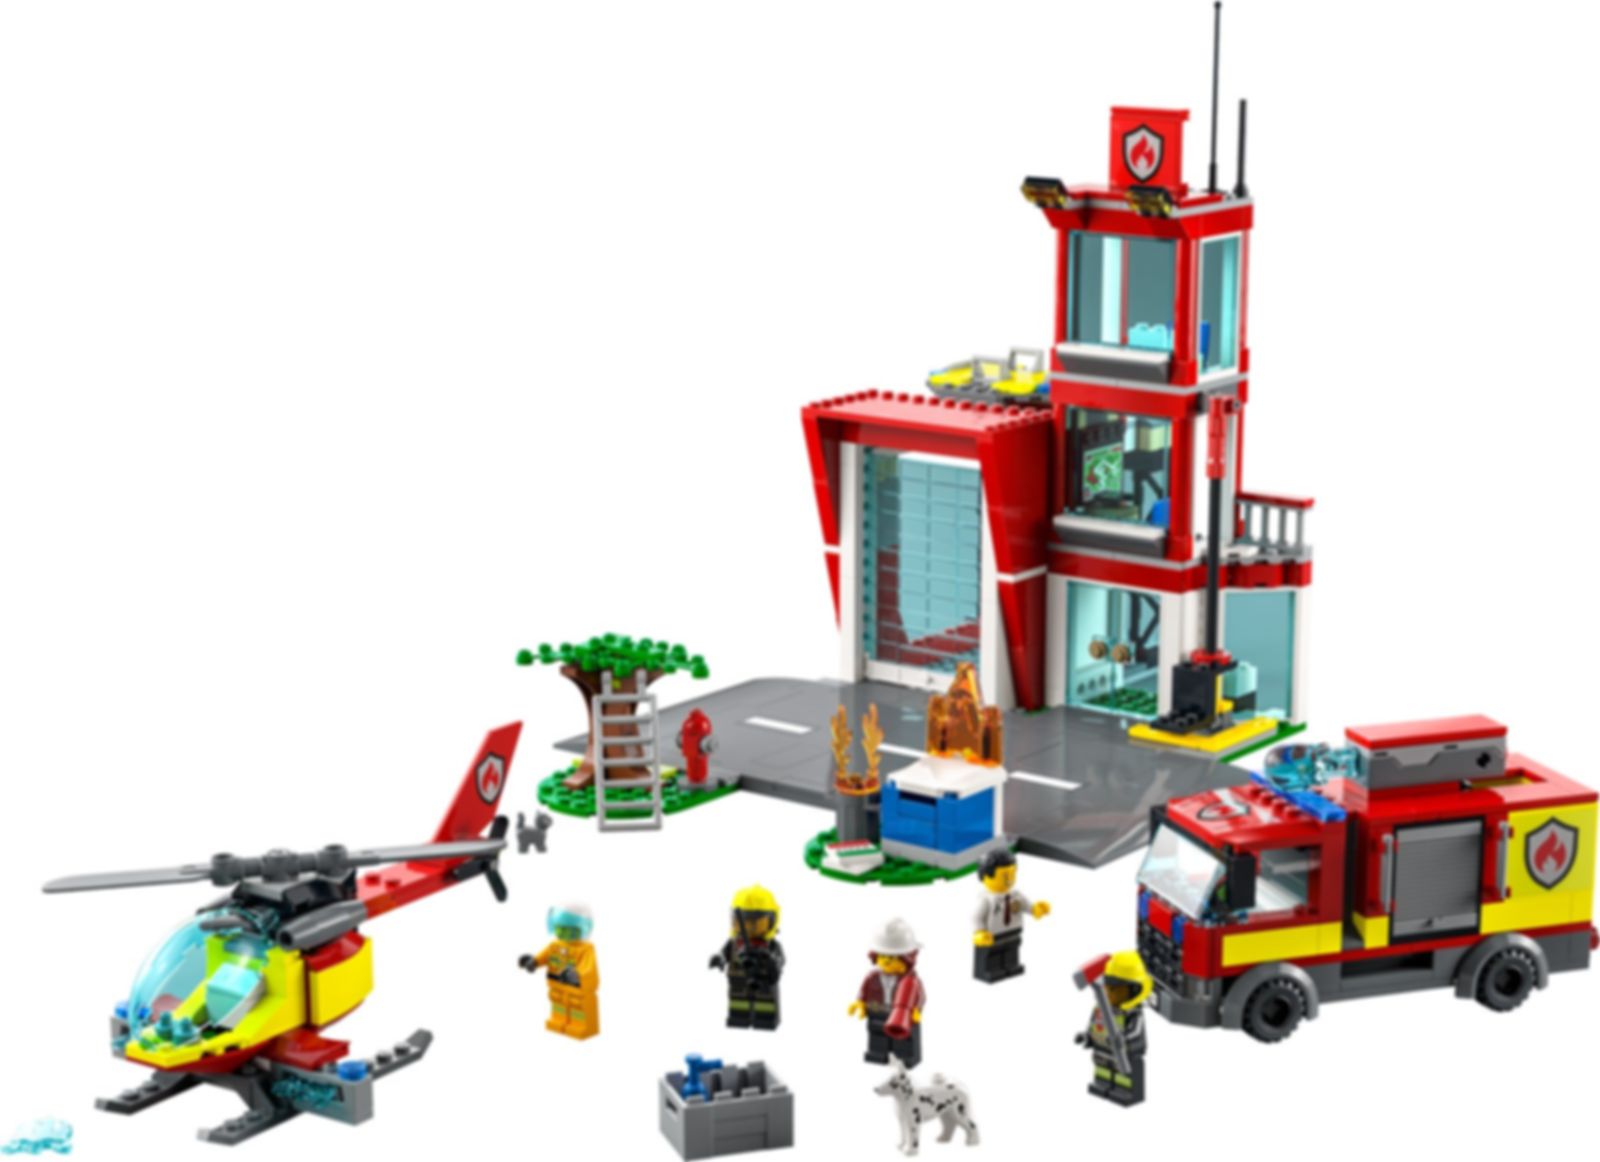 LEGO® City Parque de Bomberos partes